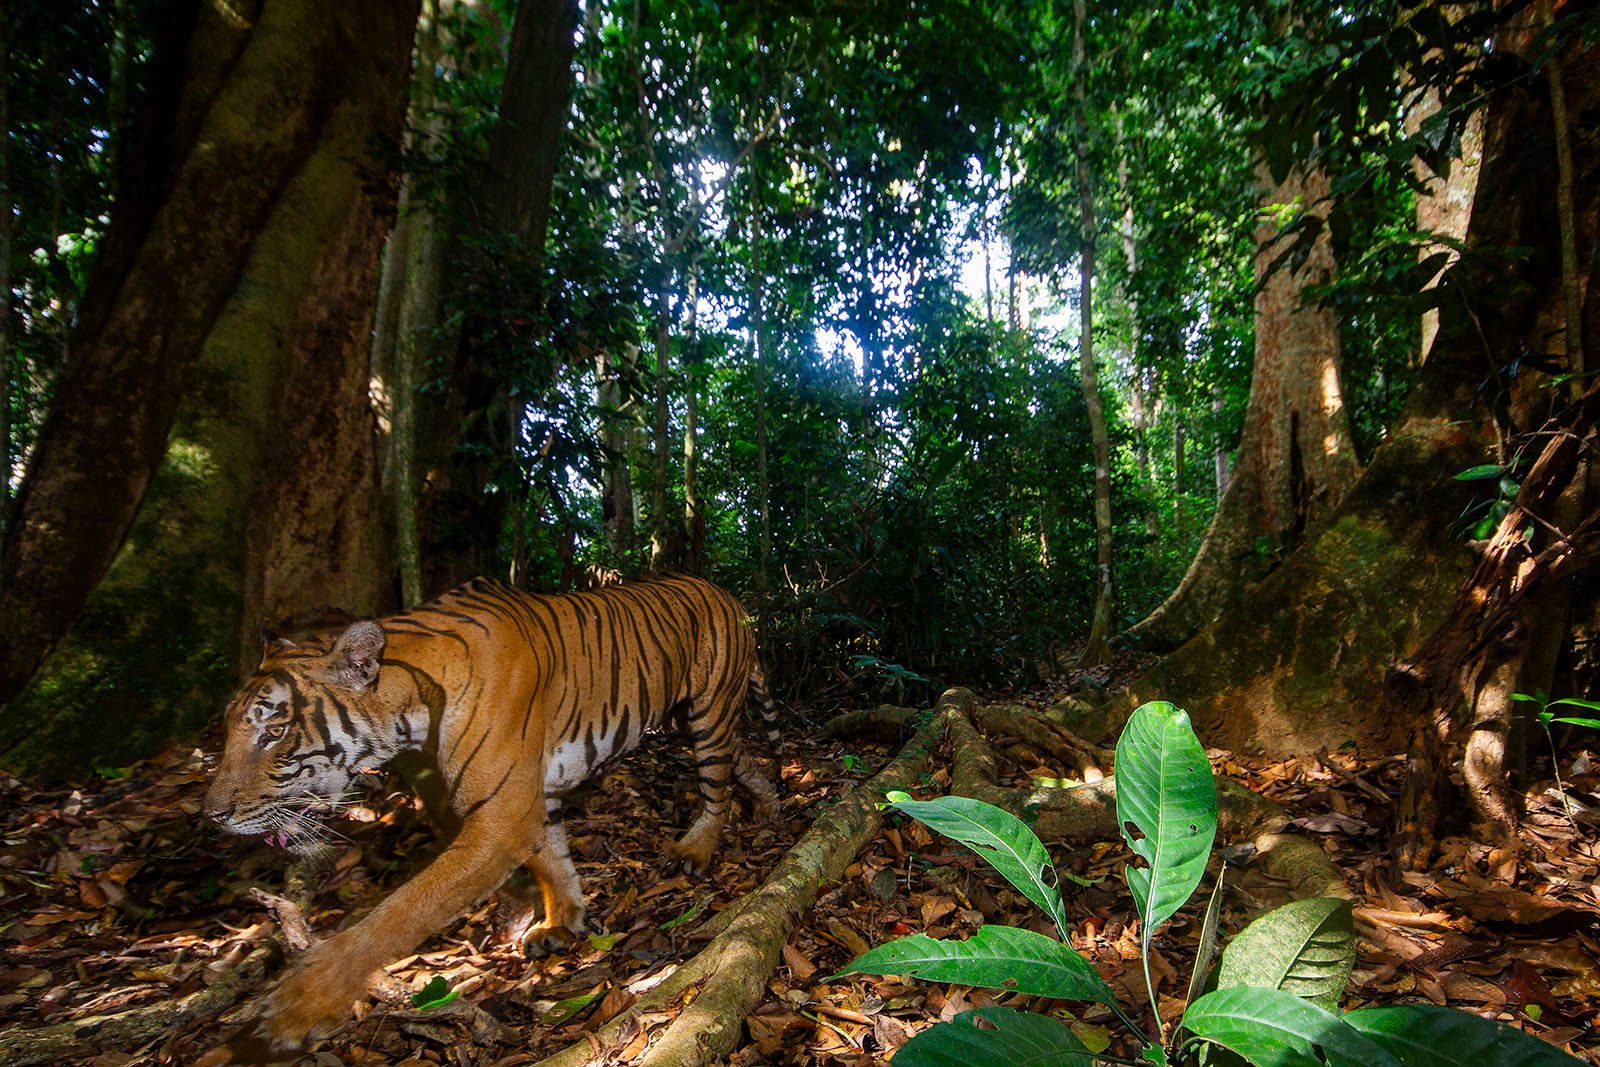 A Malayan tiger captured using a camera trap.